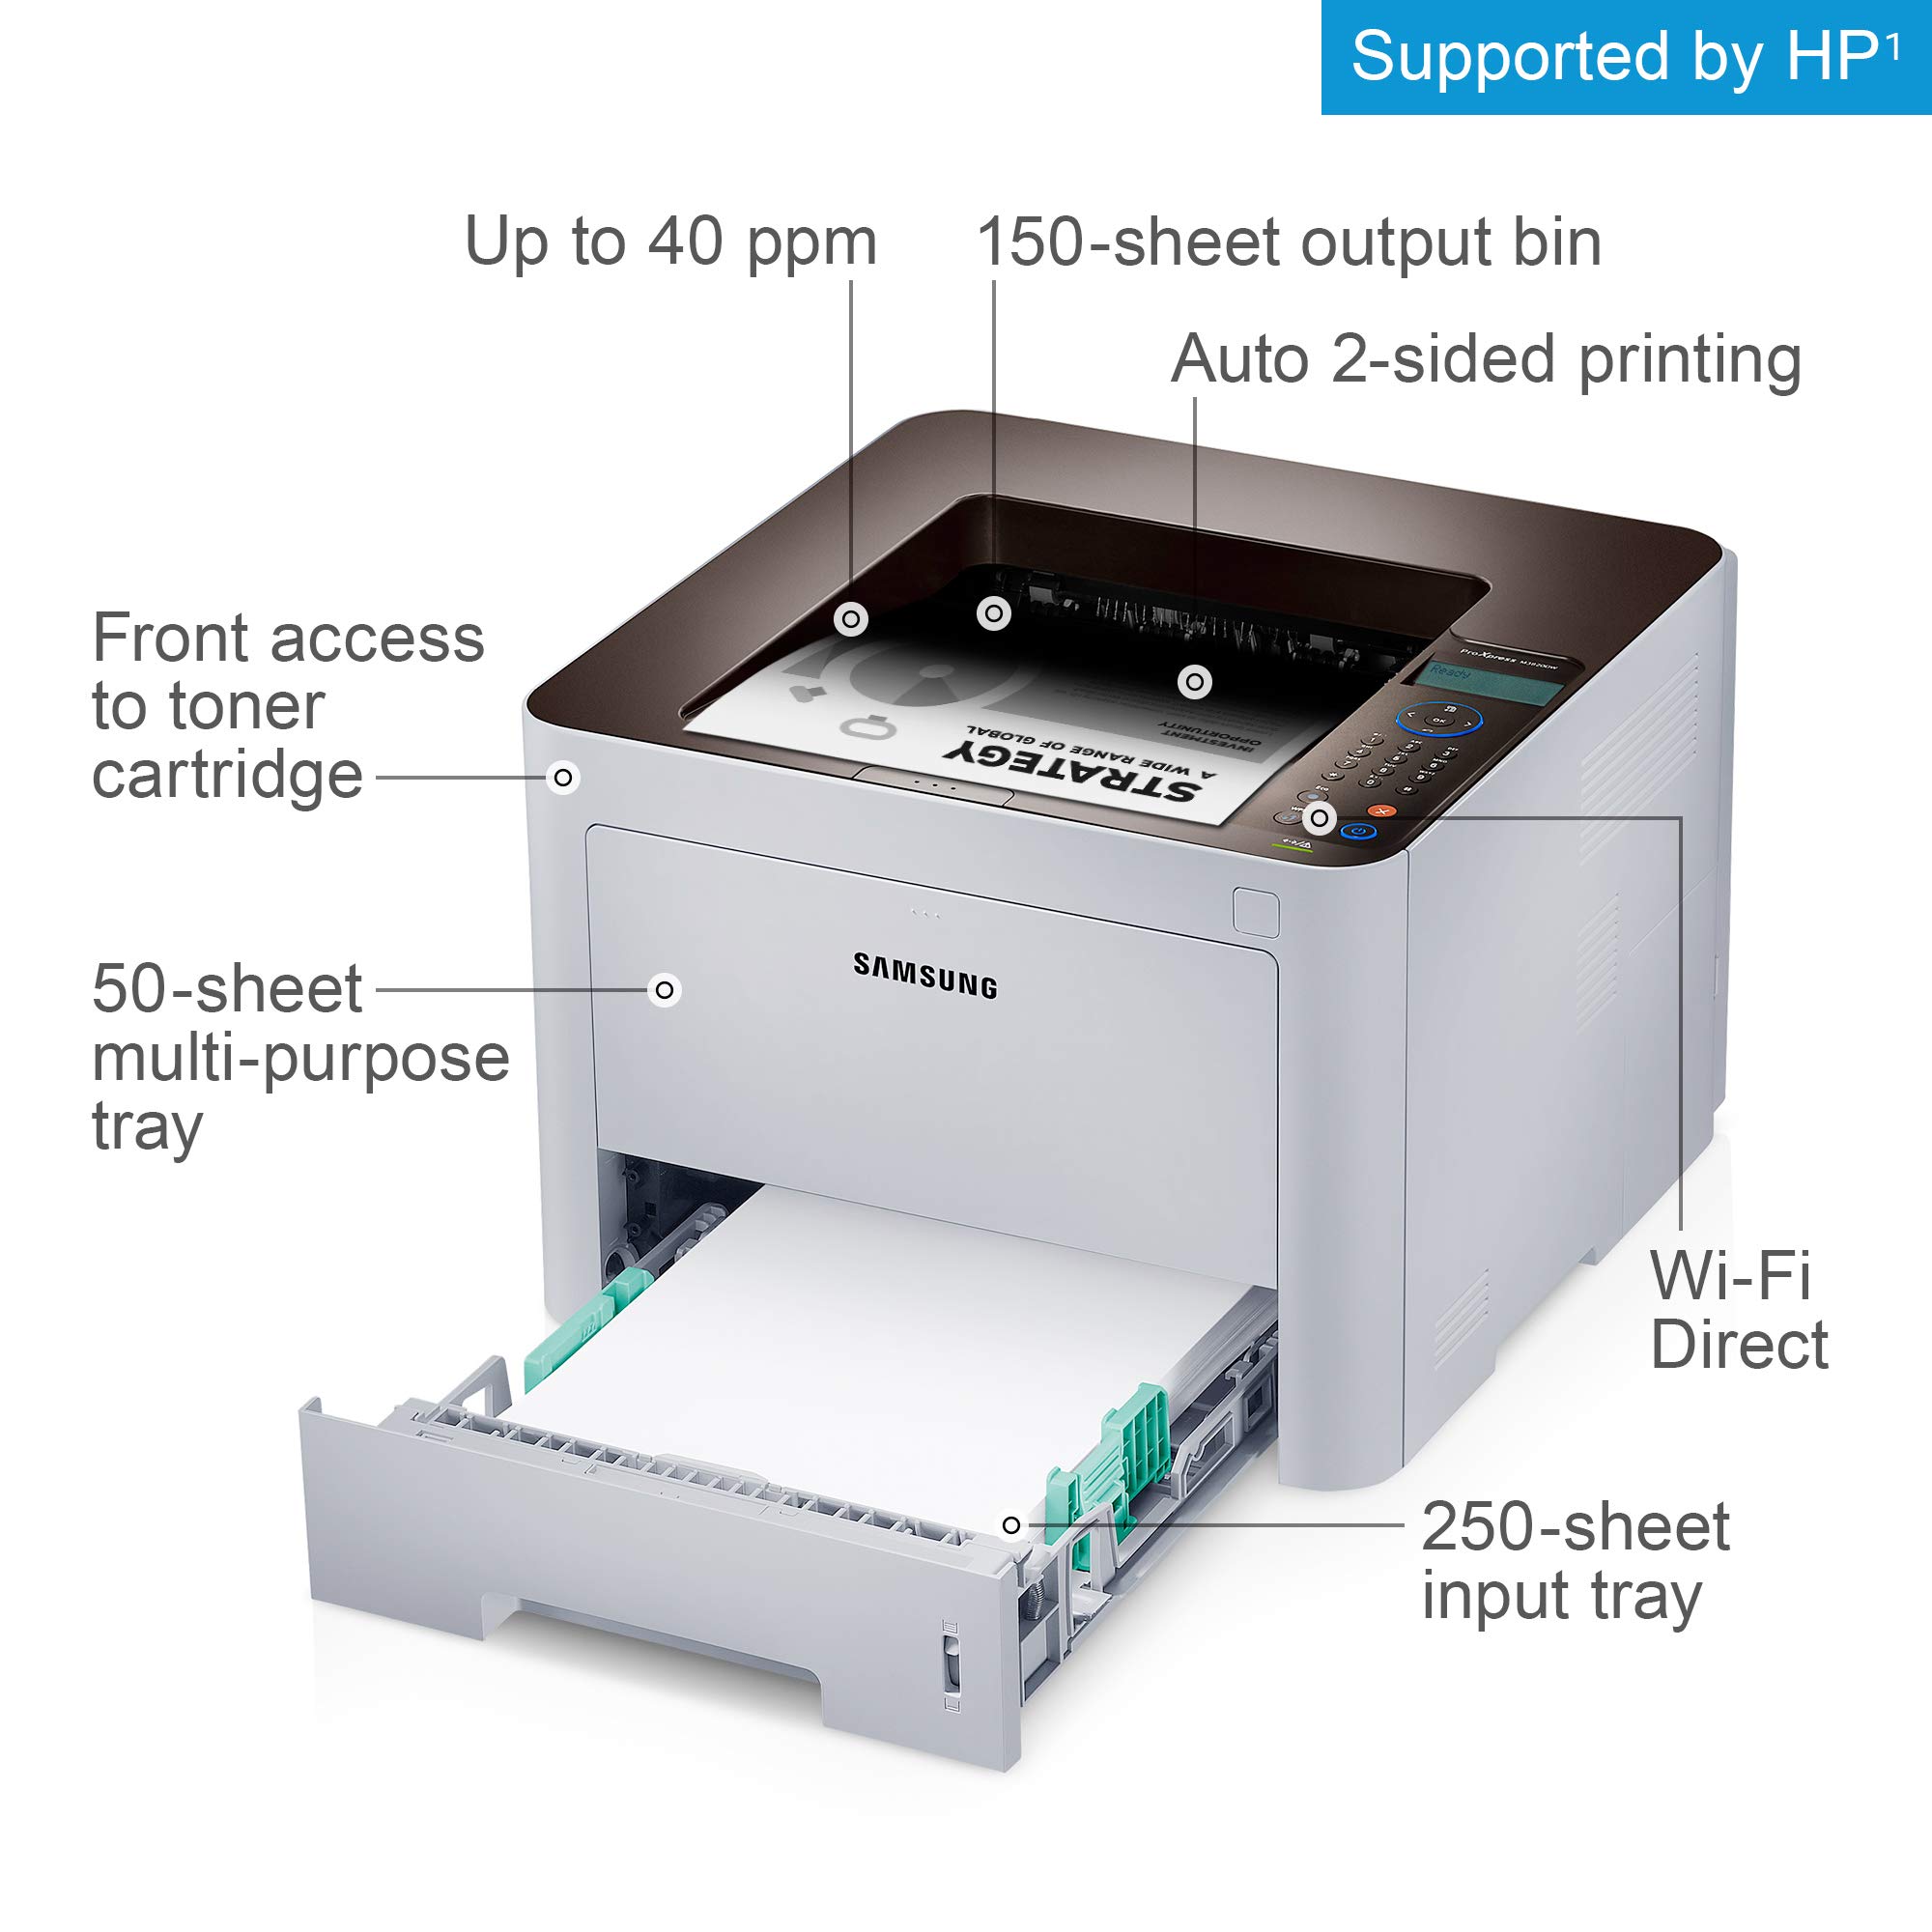 Samsung ProXpress SL-M3820 Laser Printer series